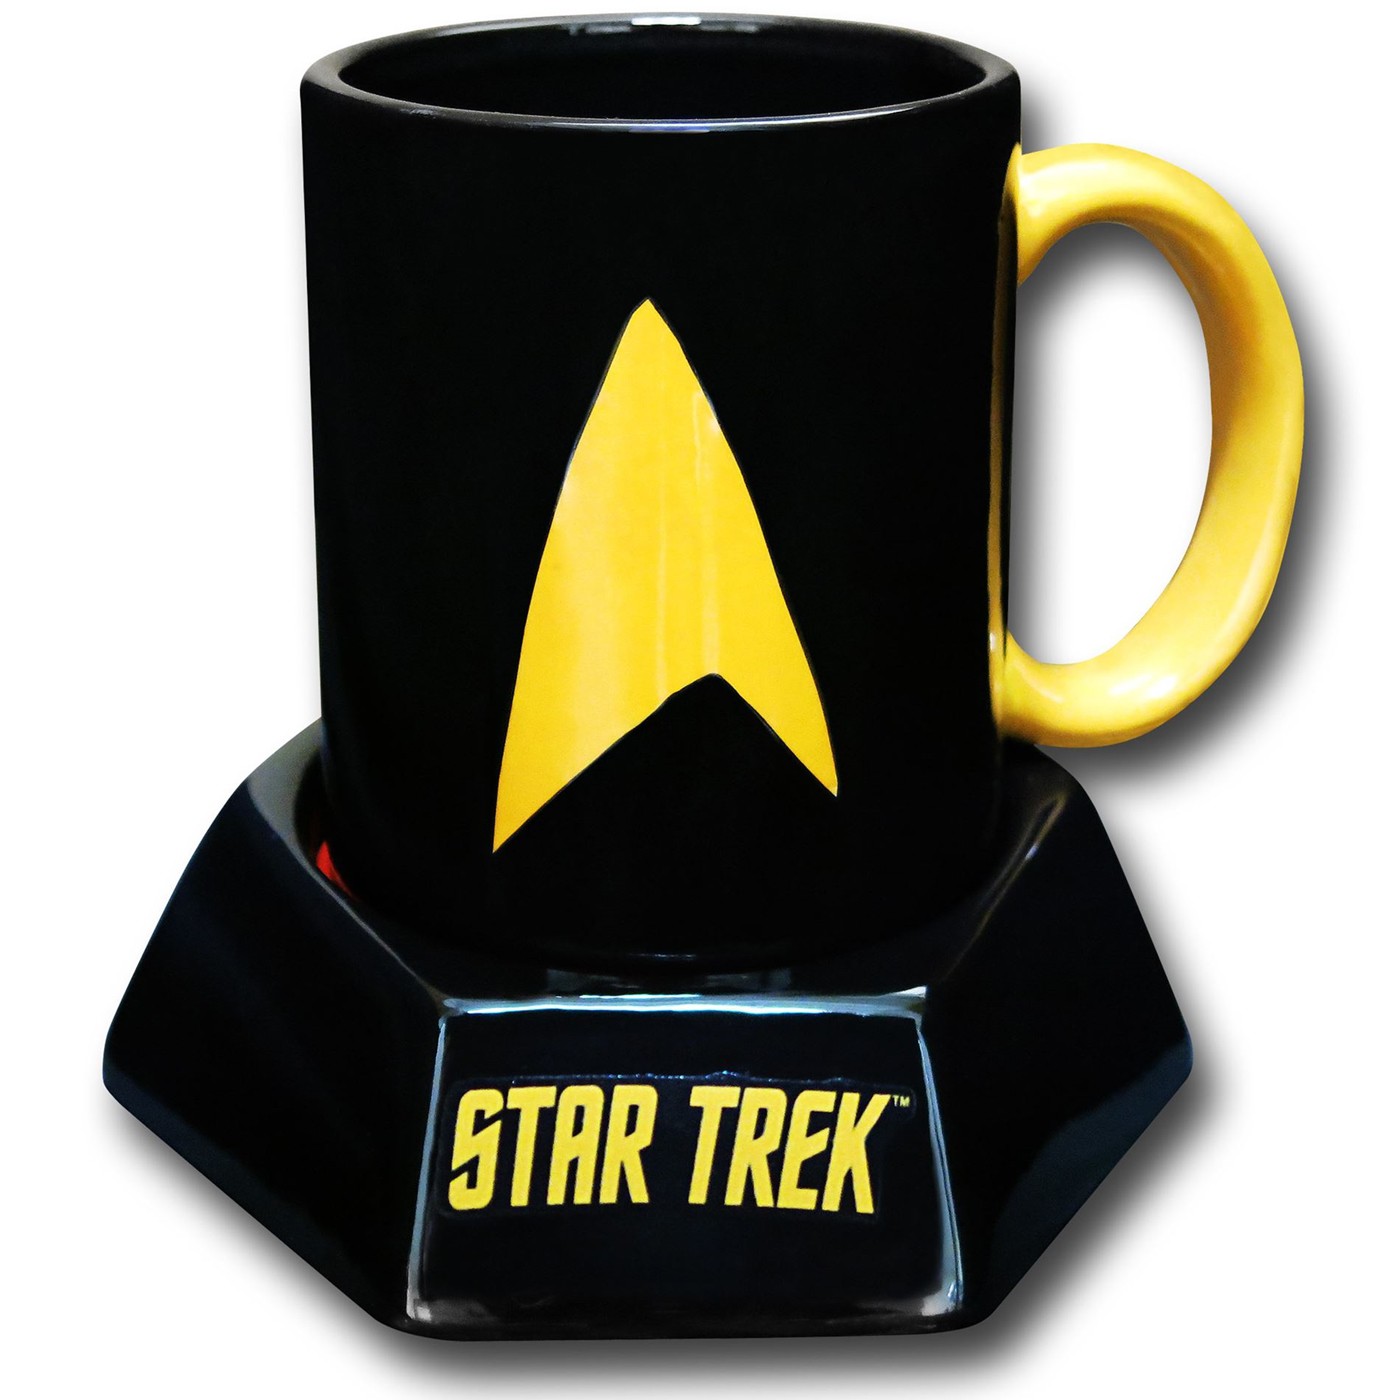 Star Trek Mug with Teleporter Sound Base